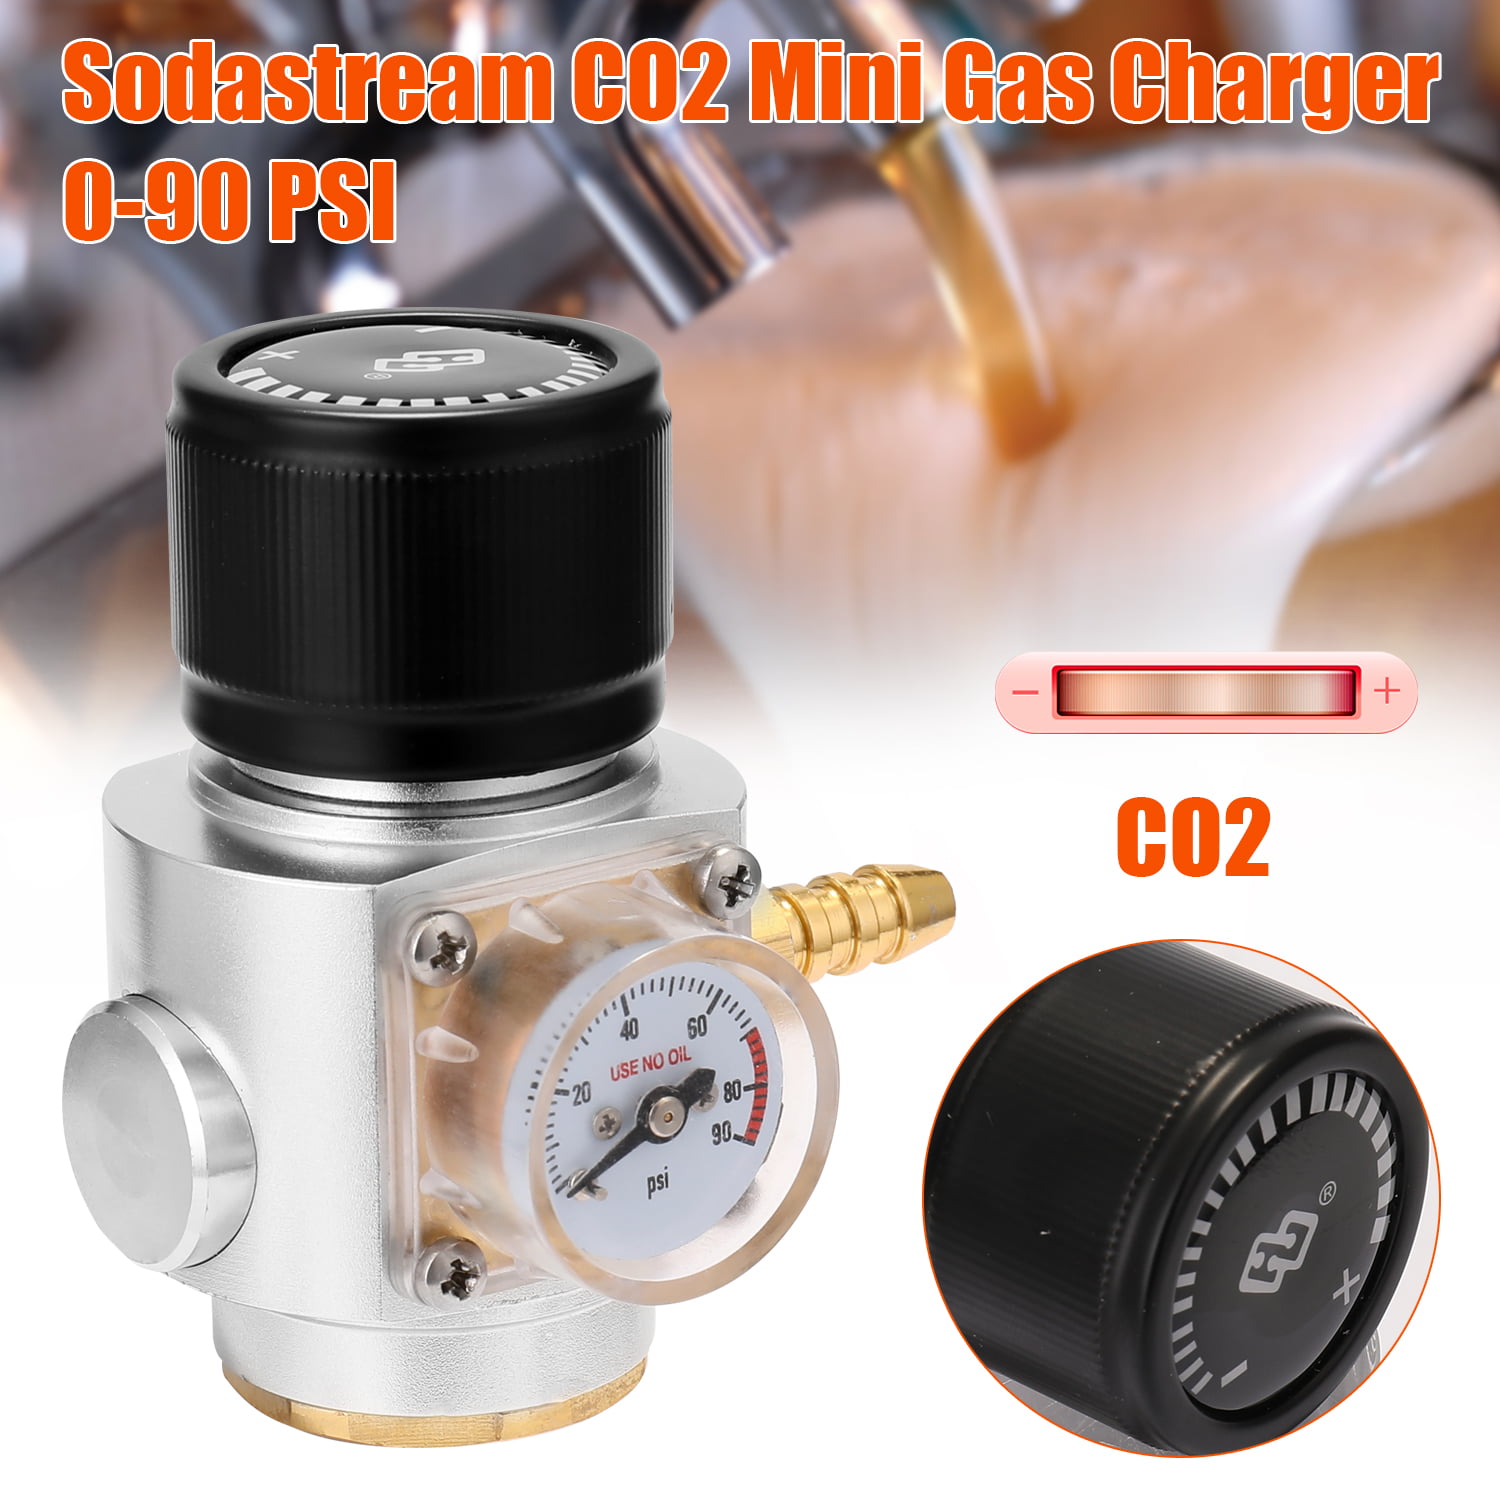 Janhiny Sodastream CO2 Mini Gas Ladegerät 0-90 PSI Manometer für Sodawasser Bier Kegerator